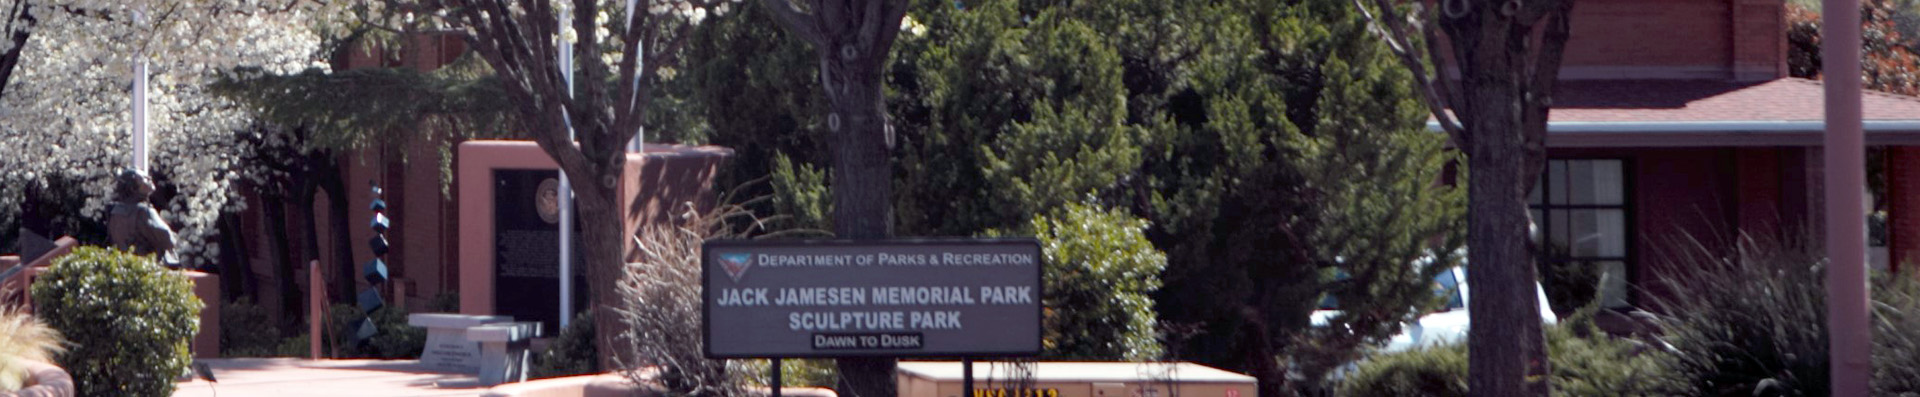 Entrance to Friends of Jack Jamesen Memorial Park